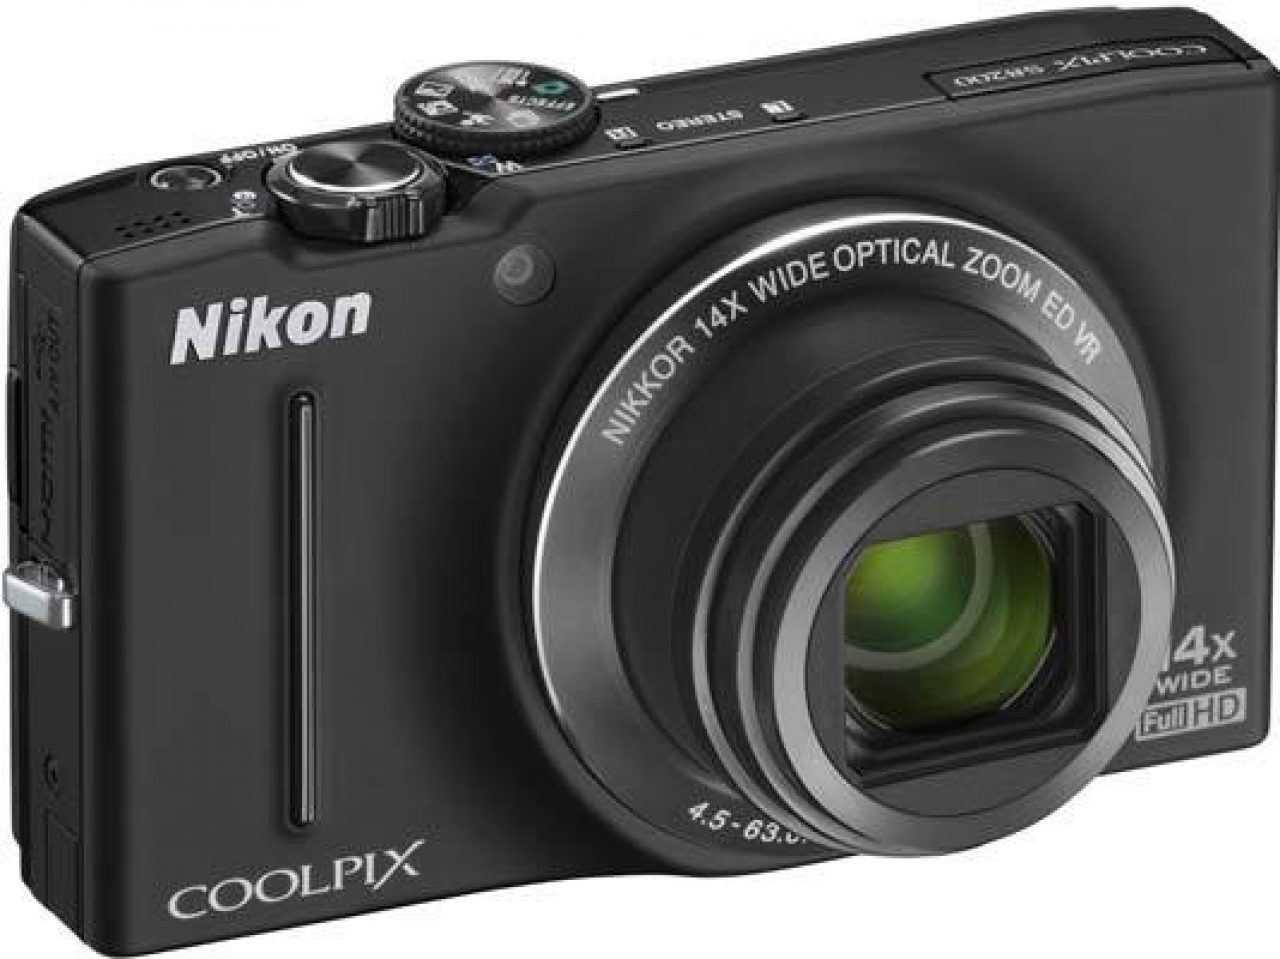 Nikon Coolpix S8200 Review | Photography Blog